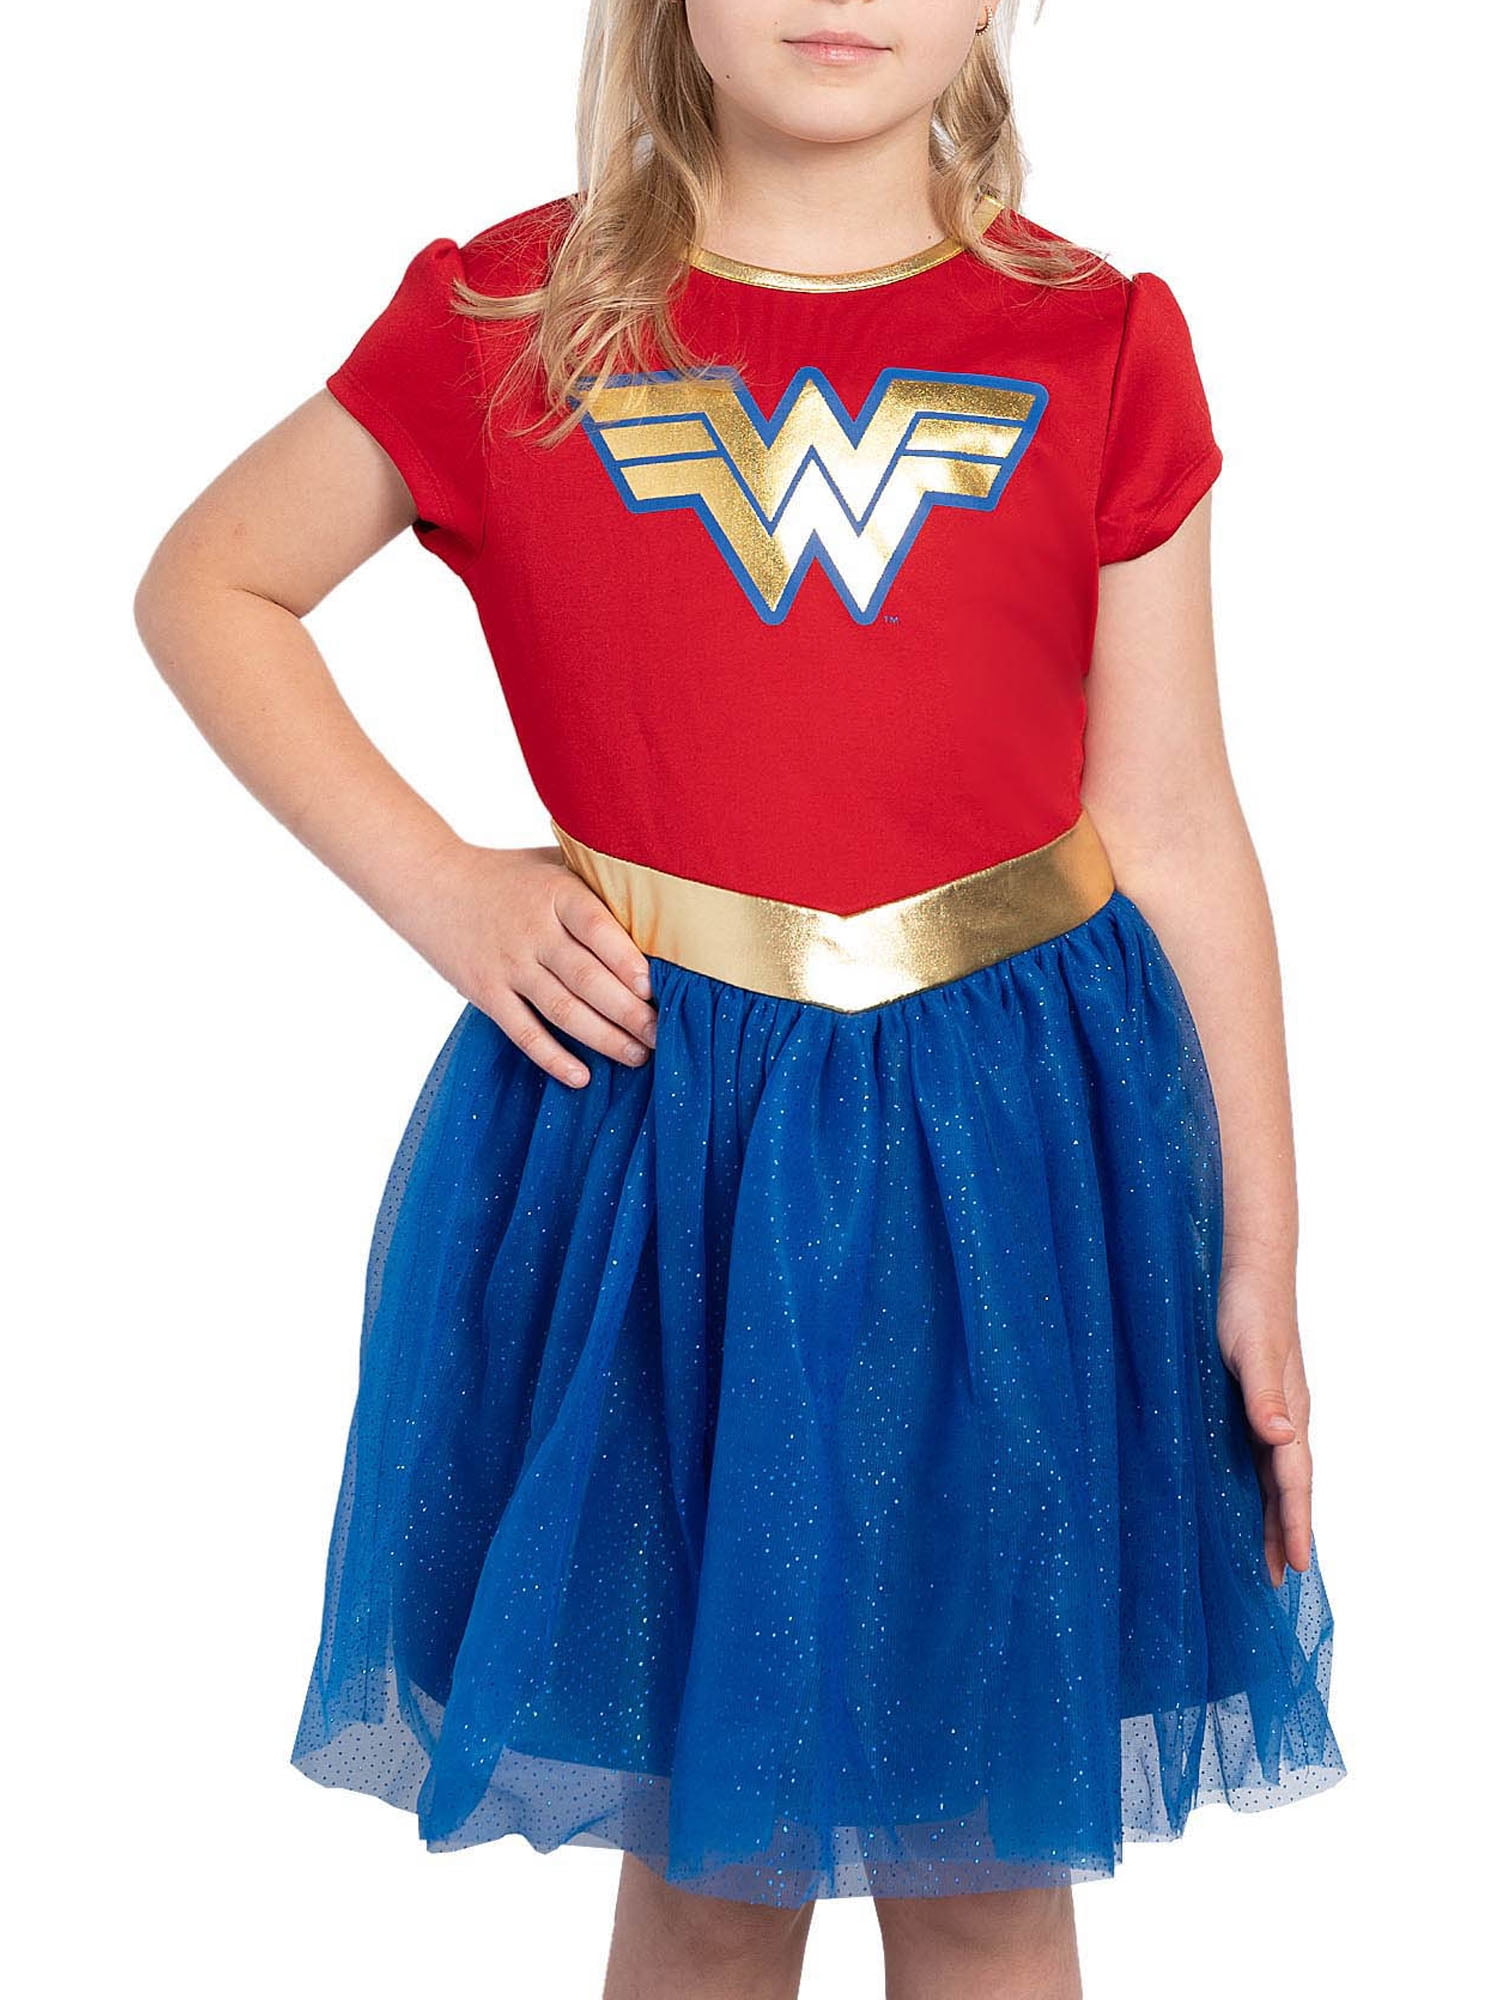 Dc Comics Girls Wonder Woman Costume Dress Tutu Cosplay Red Blue